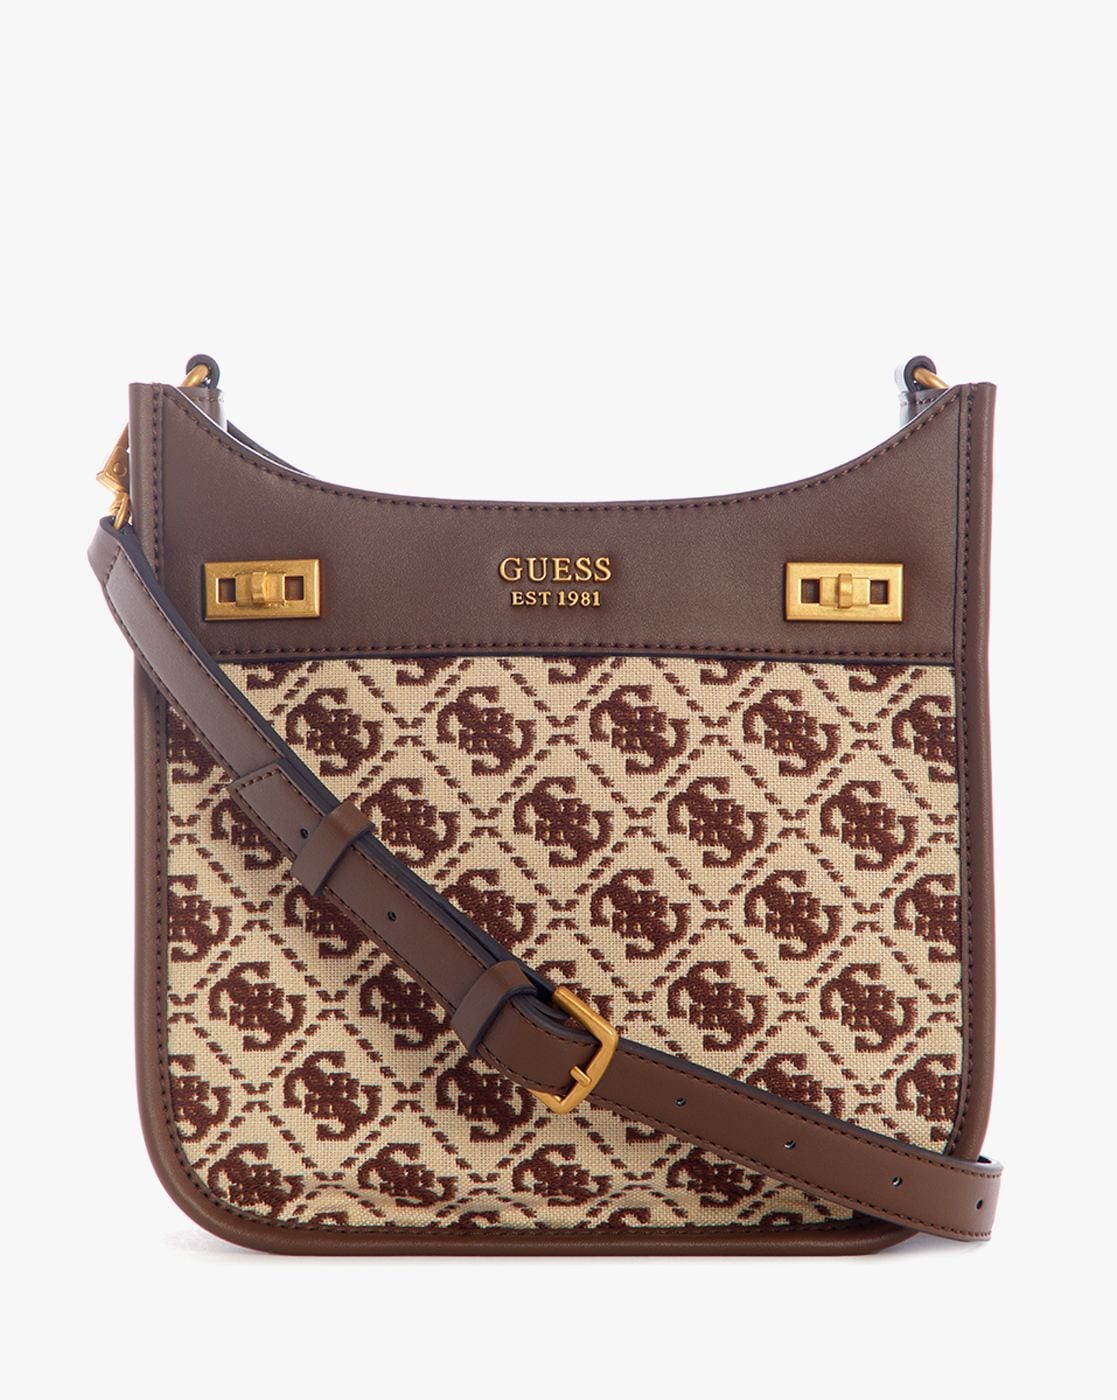 Buy Pre-Owned Authentic Luxury Guess Handbag Online | Luxepolis.Com